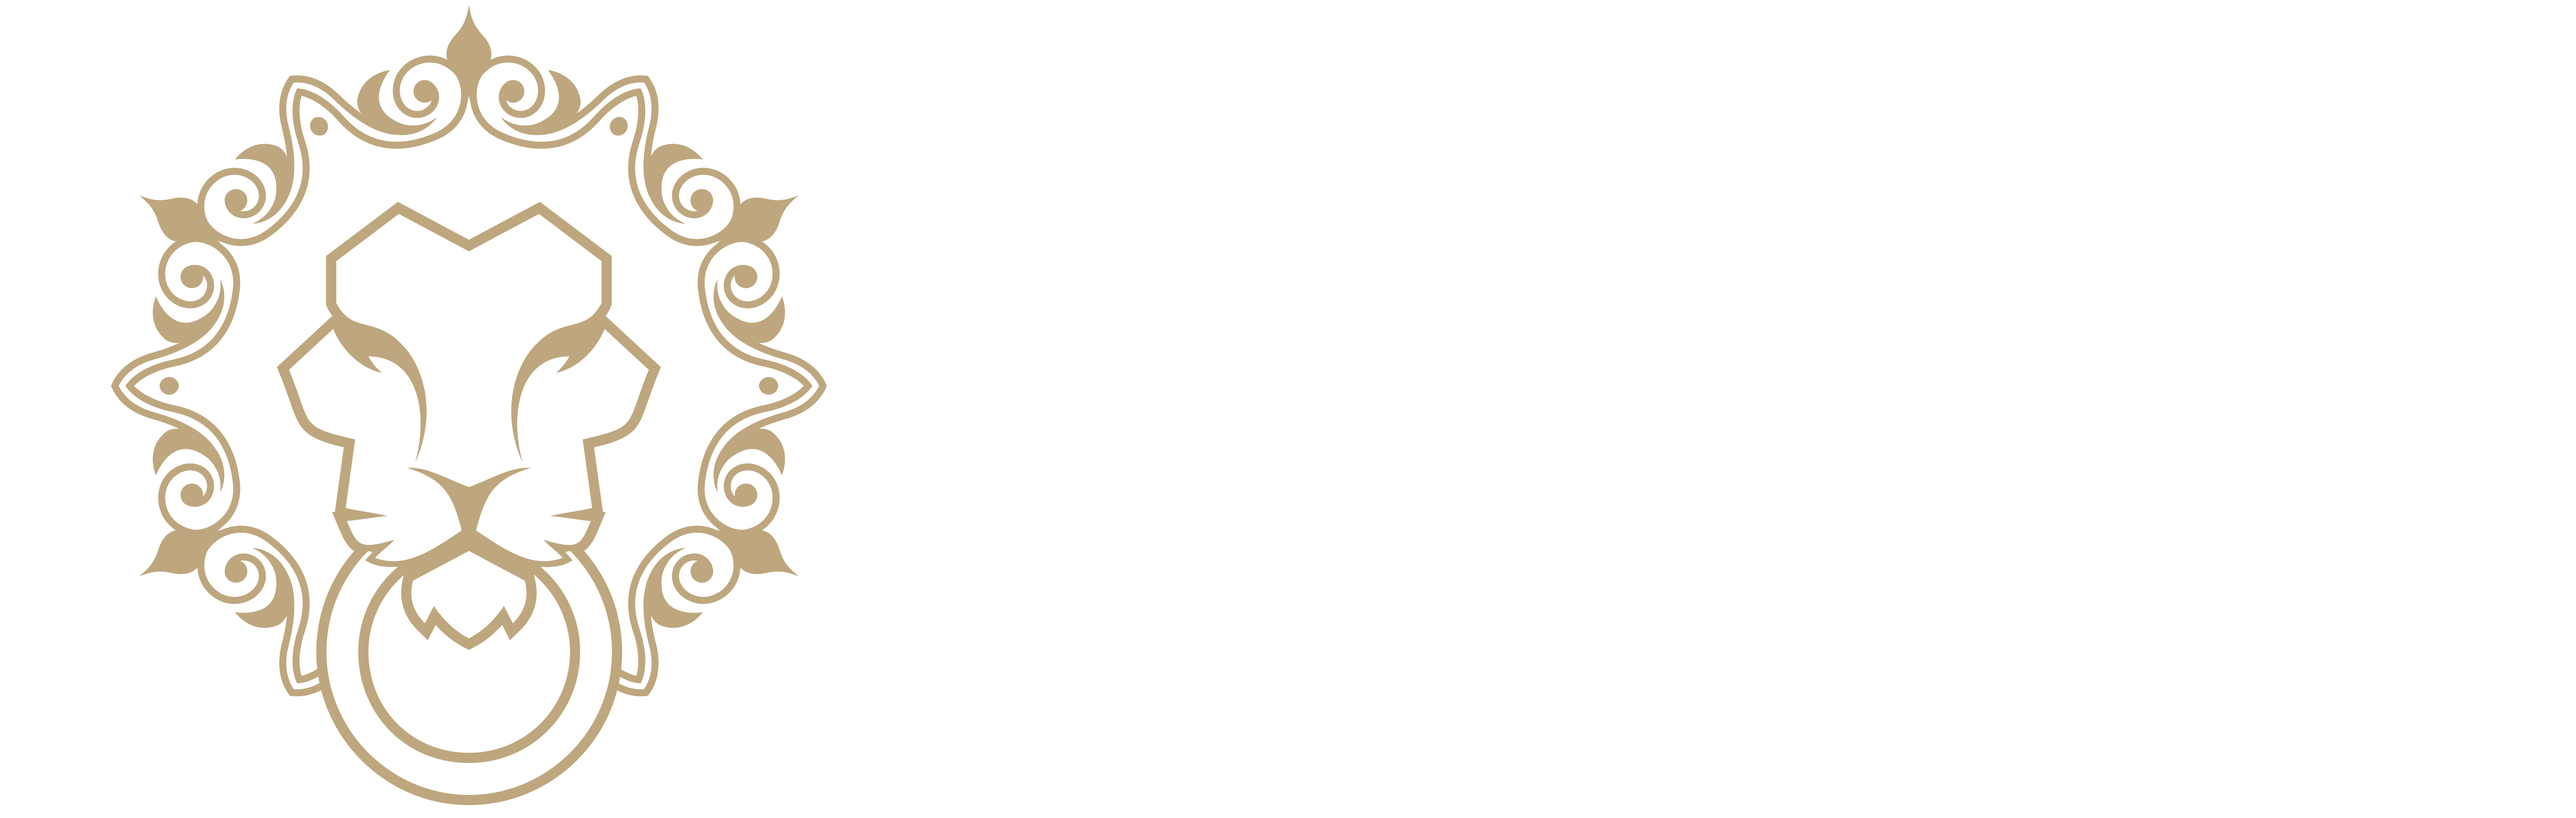 Laroche Groupe Paris Properties